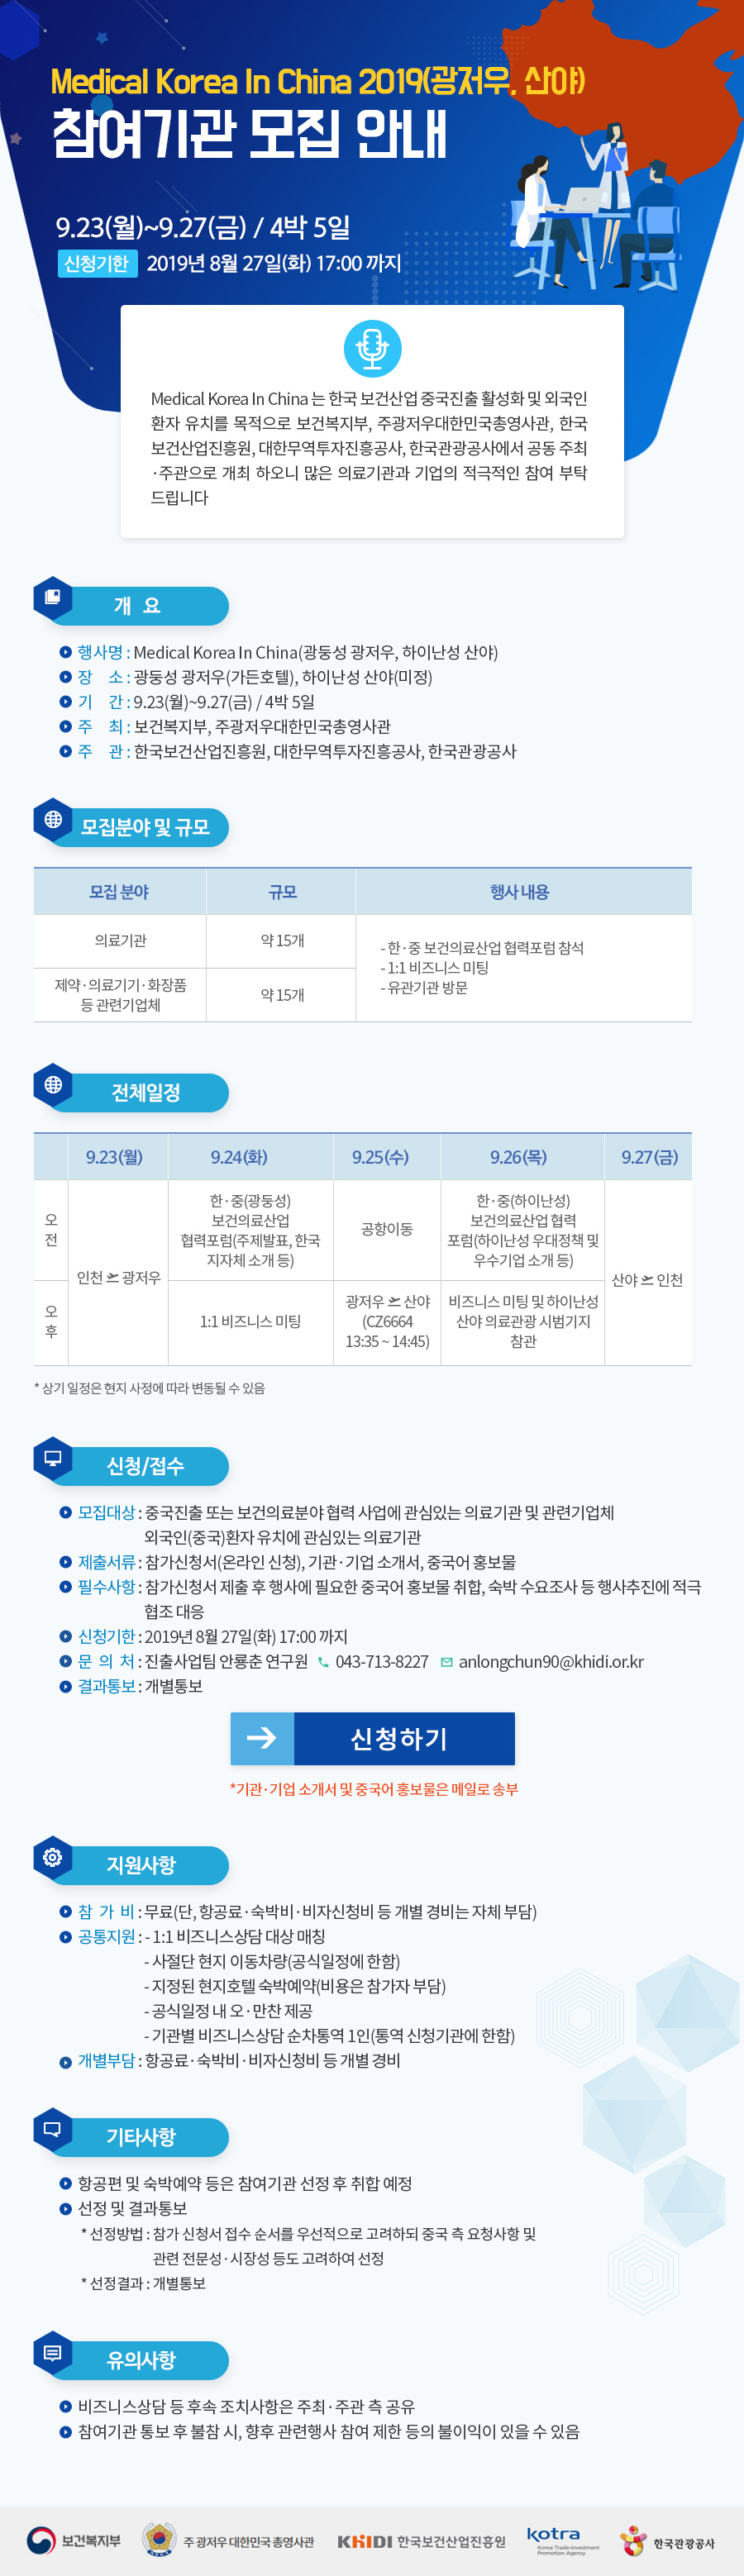 Medical Korea In China 2019(광저우, 산야) 참여기관 모집 안내 9.23(월)~9.27(금) / 4박5일 신청기한 : 2019년 8월 27일(화) 17:00 - 자세한 내용은 첨부된 파일(Medical Korea In China 2019 (광저우, 산야) 참가기관 모집.pdf)을 다운받아 확인해 주세요.